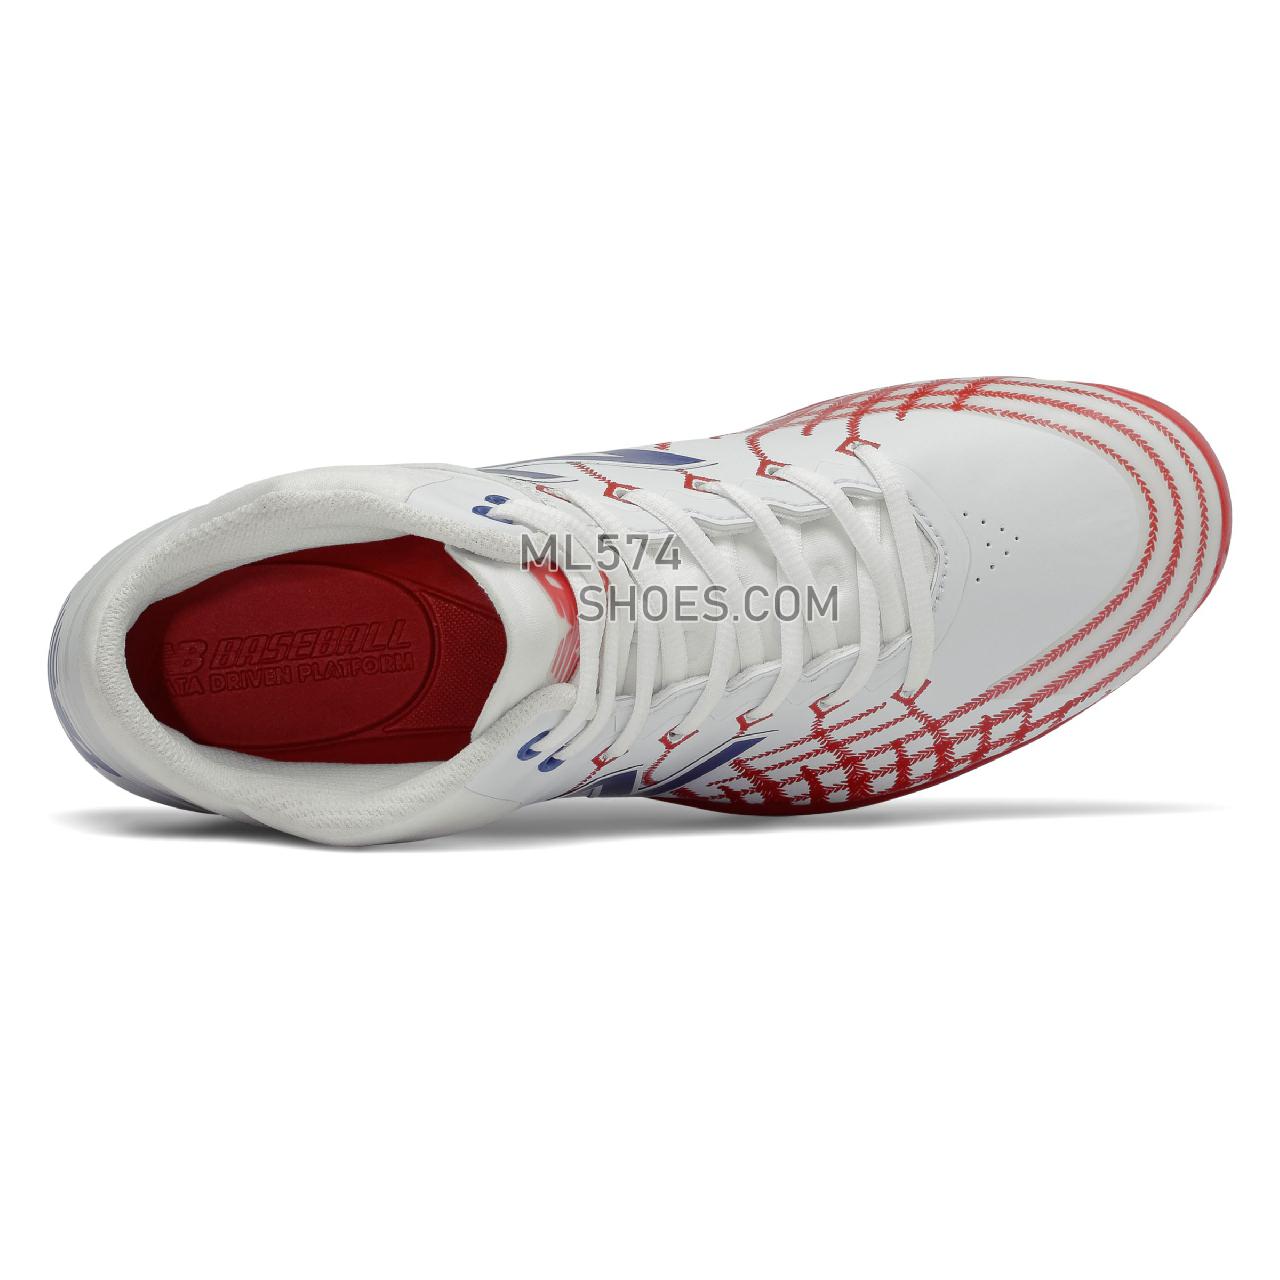 New Balance 4040v5 - Men's Baseball Turf - White with Red and Navy - PM4040PR